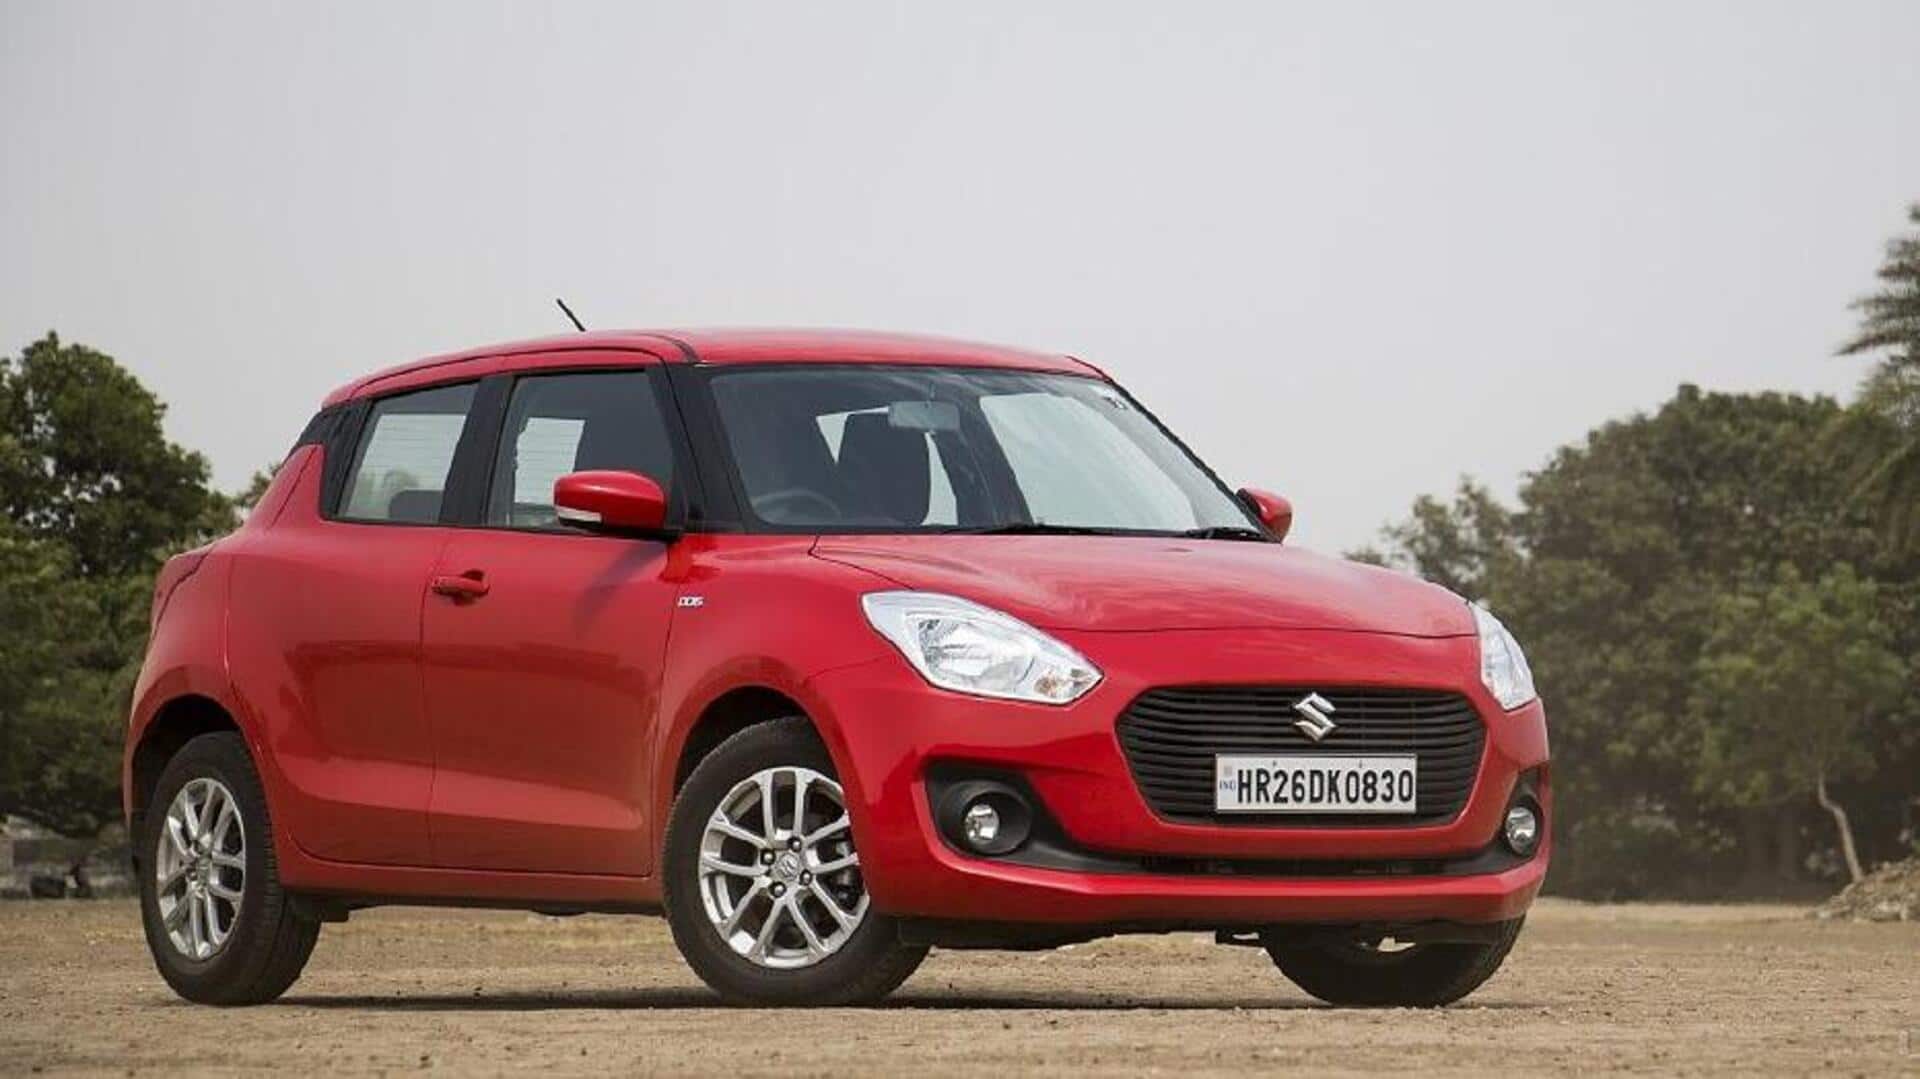 Up to ₹58,000 off on Maruti Suzuki cars this June